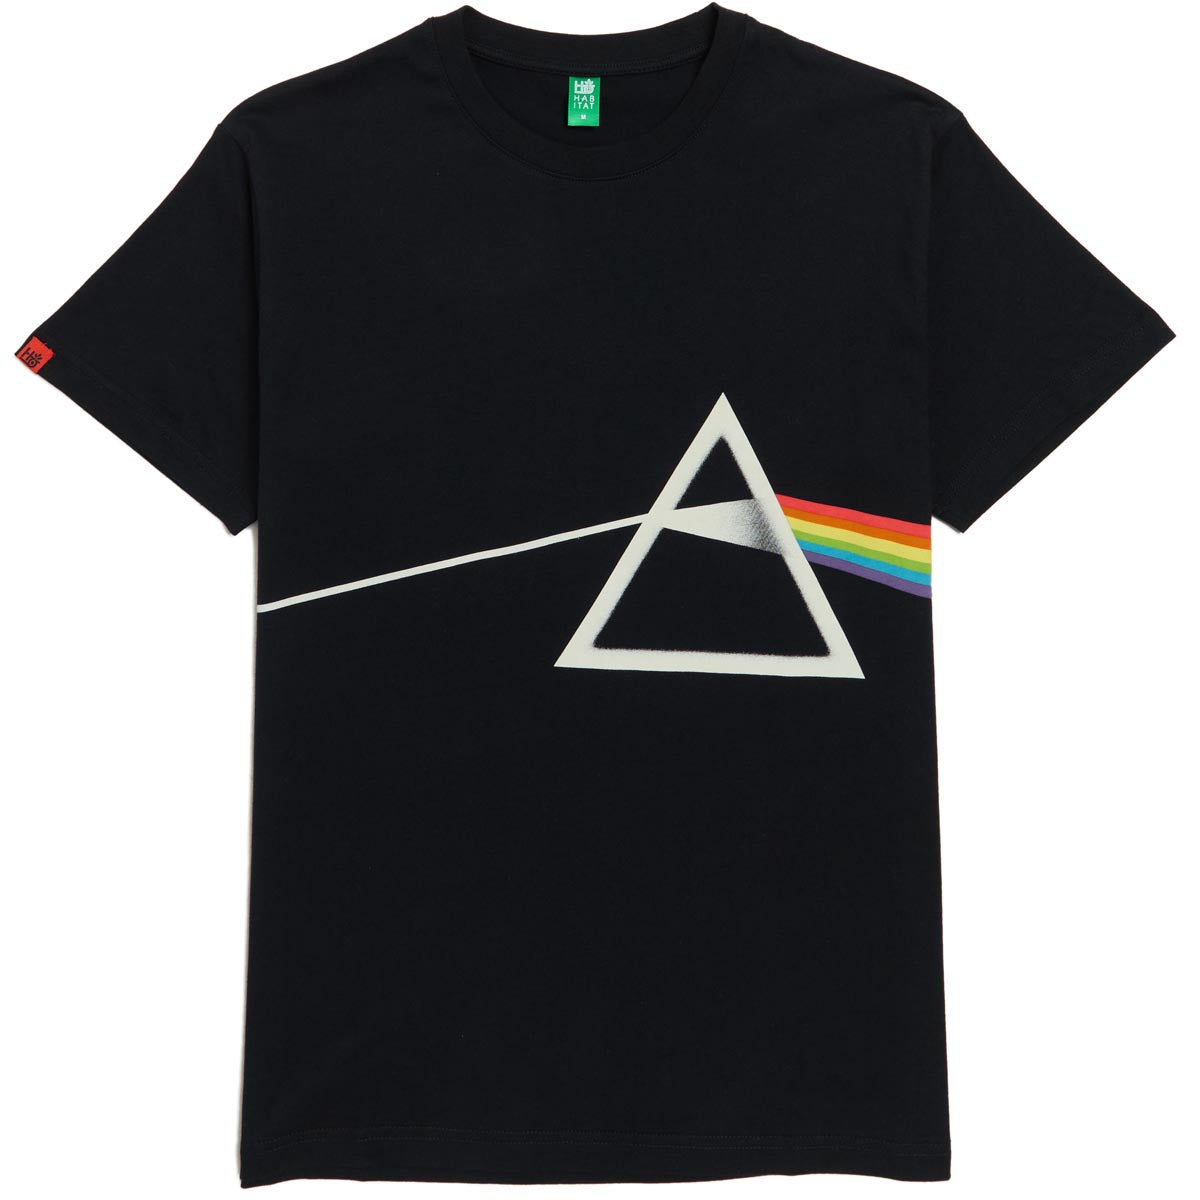 Habitat x Pink Floyd Dark Side of the Moon T-Shirt - Black image 1